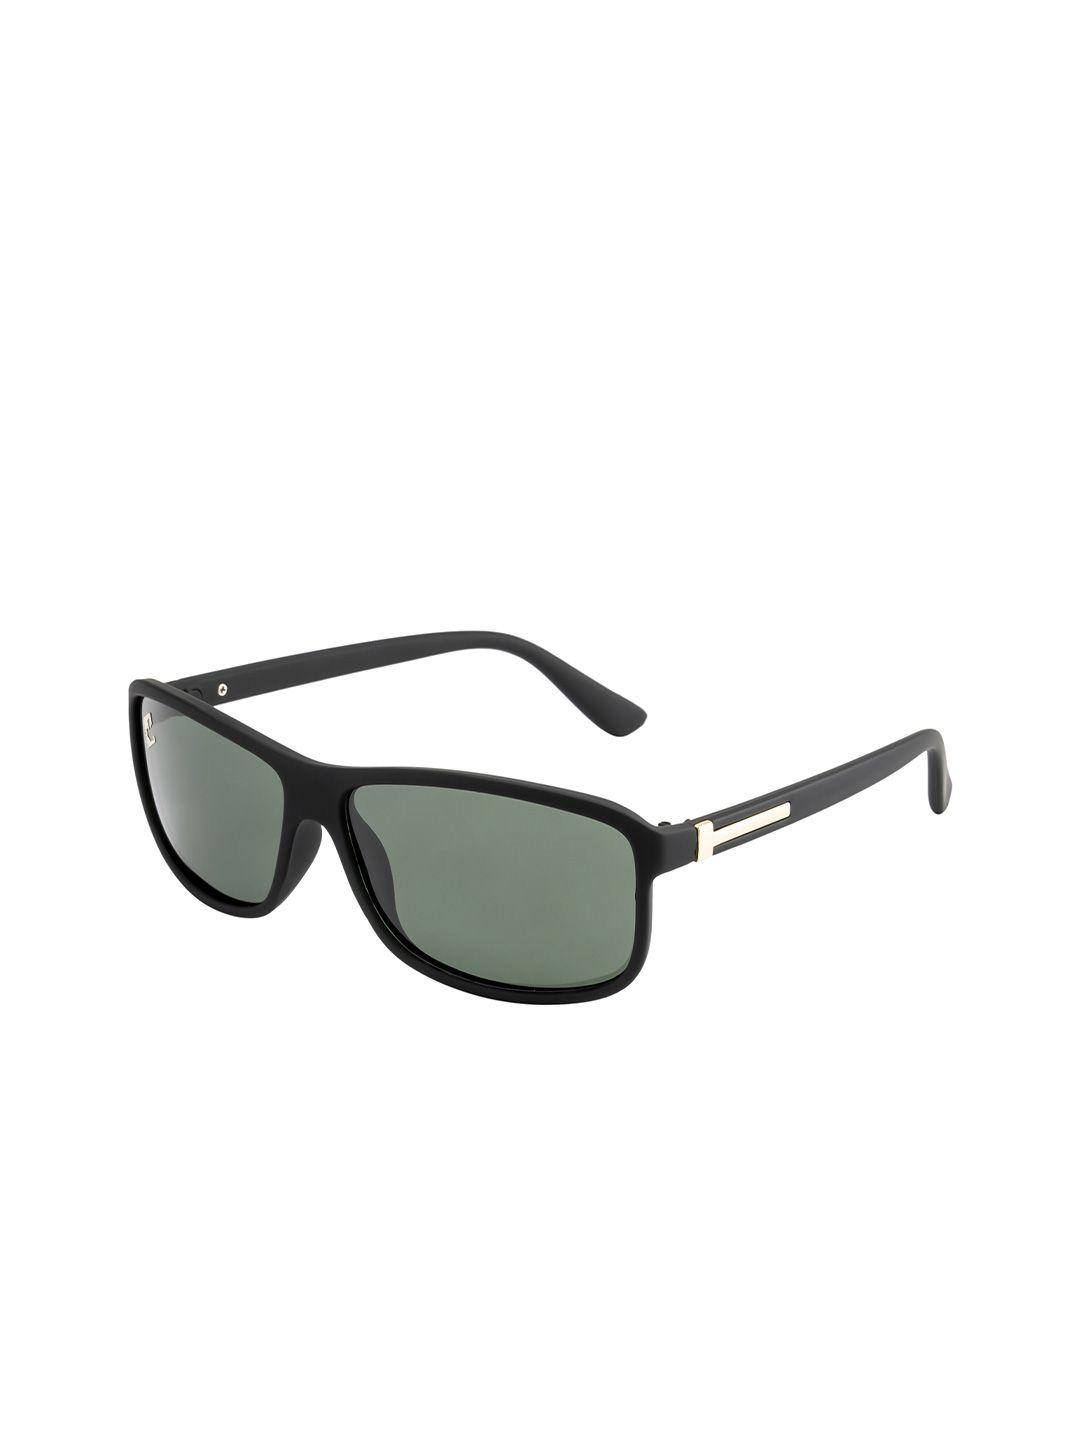 clark n palmer unisex green lens & black wayfarer sunglasses with polarised and uv protected lens